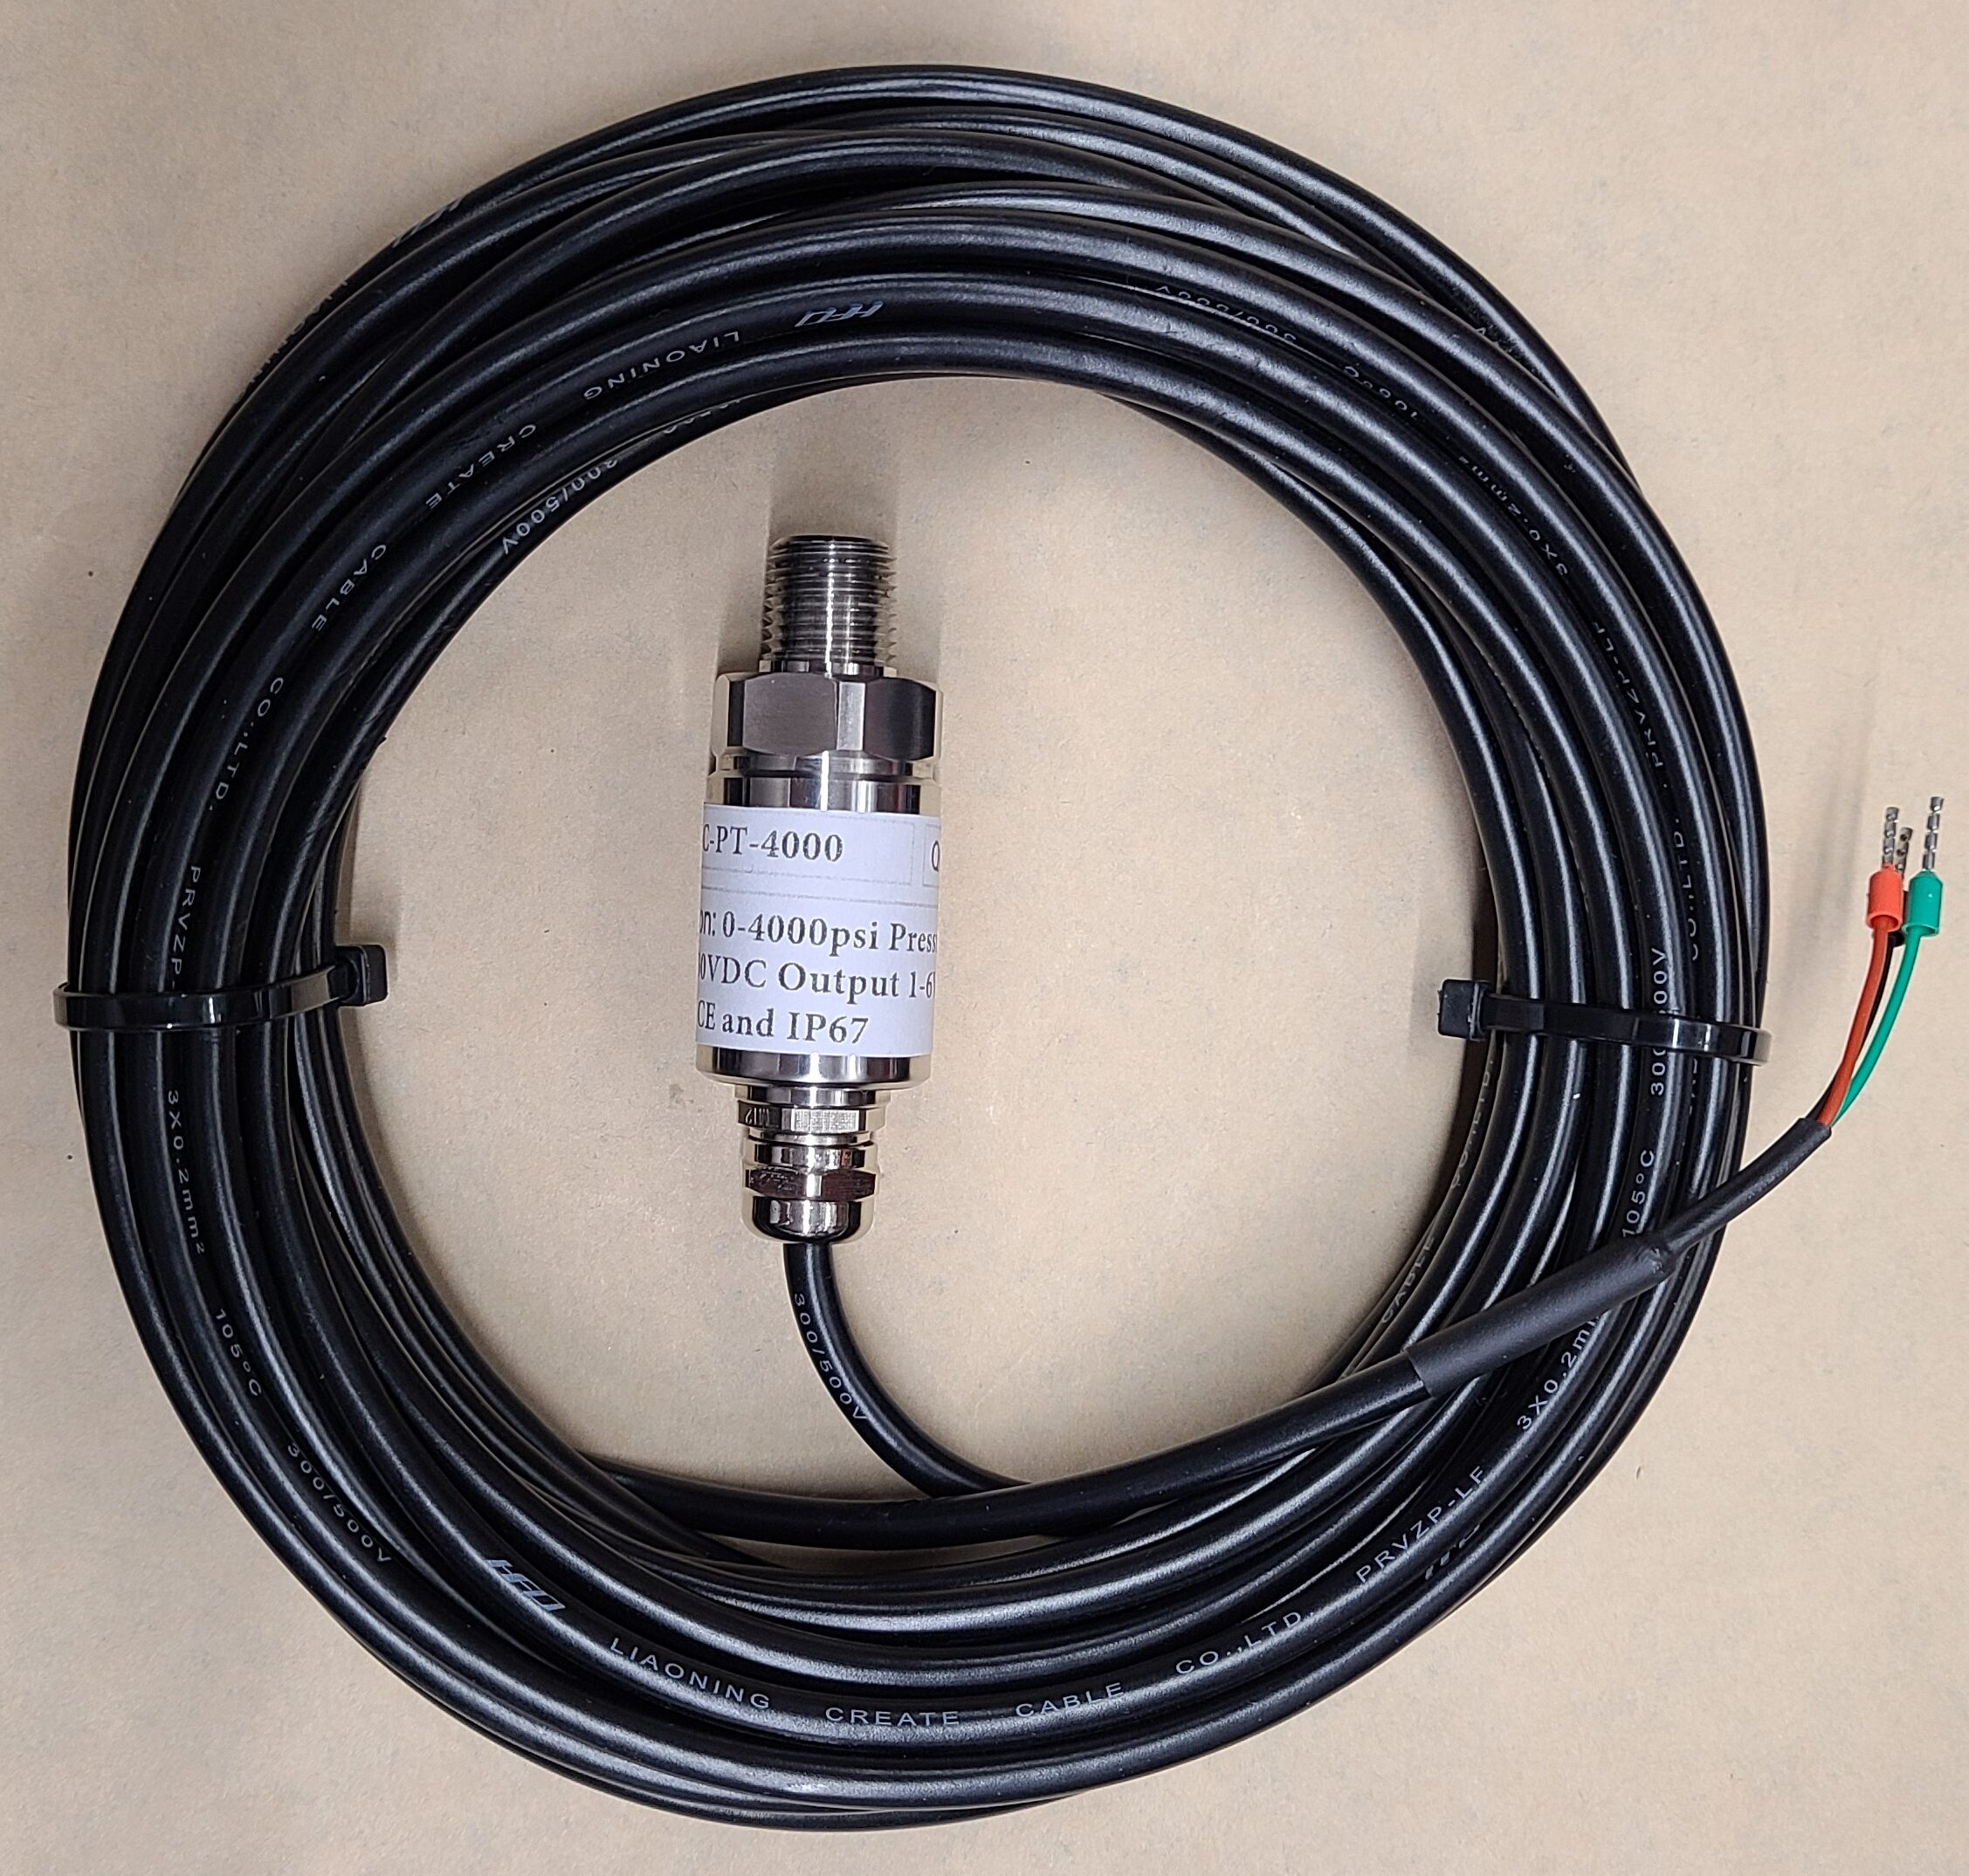 LSC-PT-4000 - 0-4000psi Pressure Transducer 10-30VDC Output 1-6V 1/4" NPT Black Ground CE and IP67